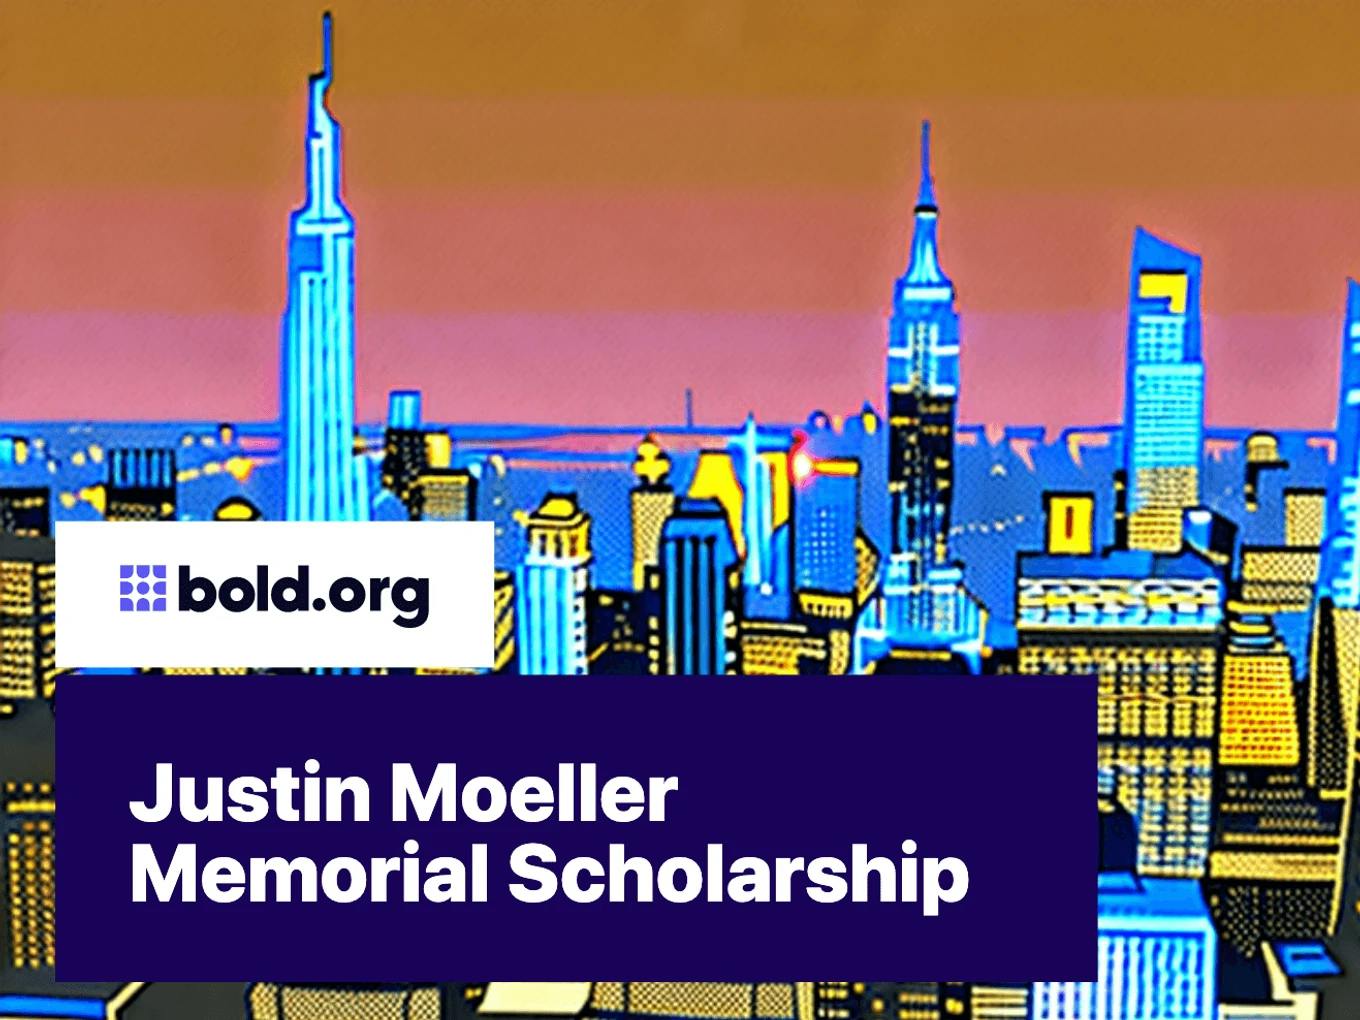 Justin Moeller Memorial Scholarship